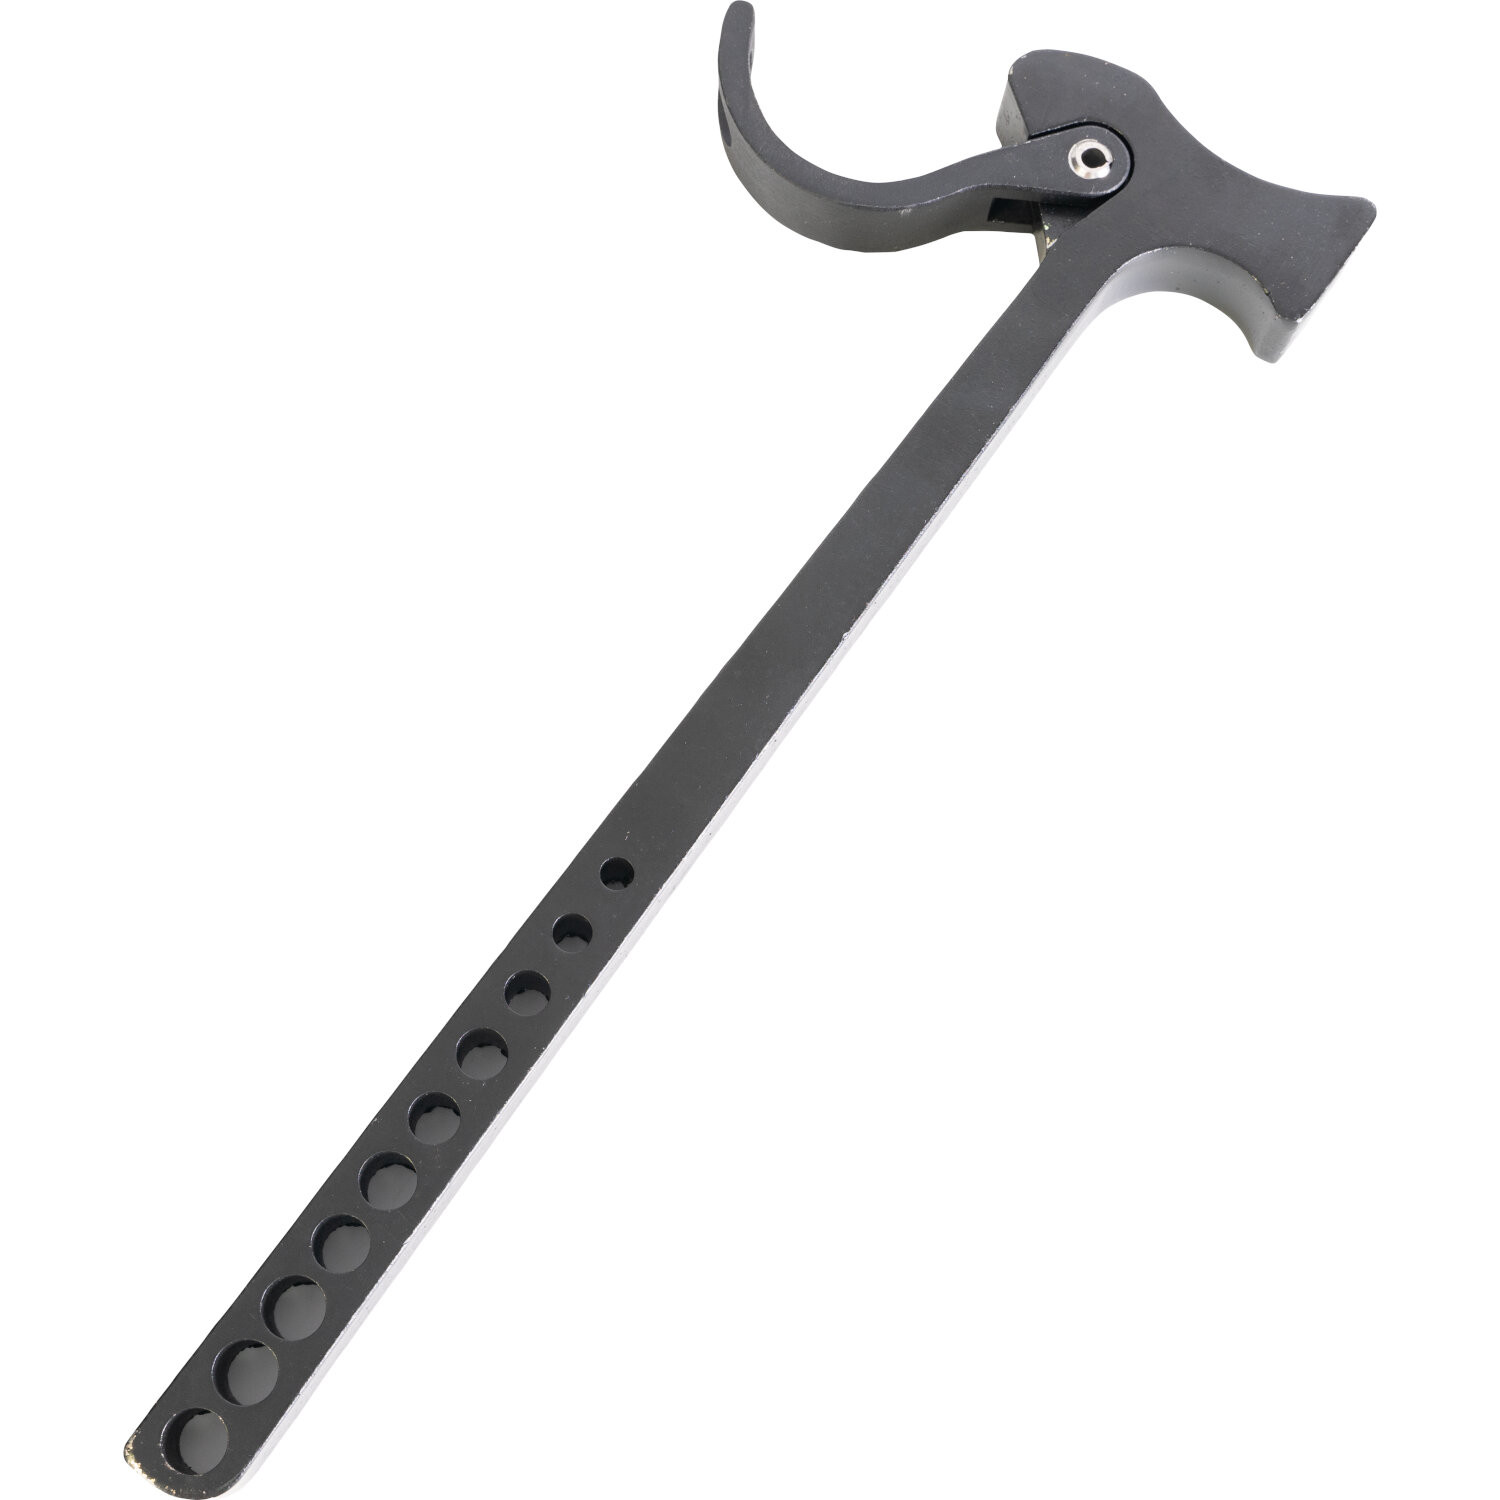 AFX Truss Pin Claw Hammer